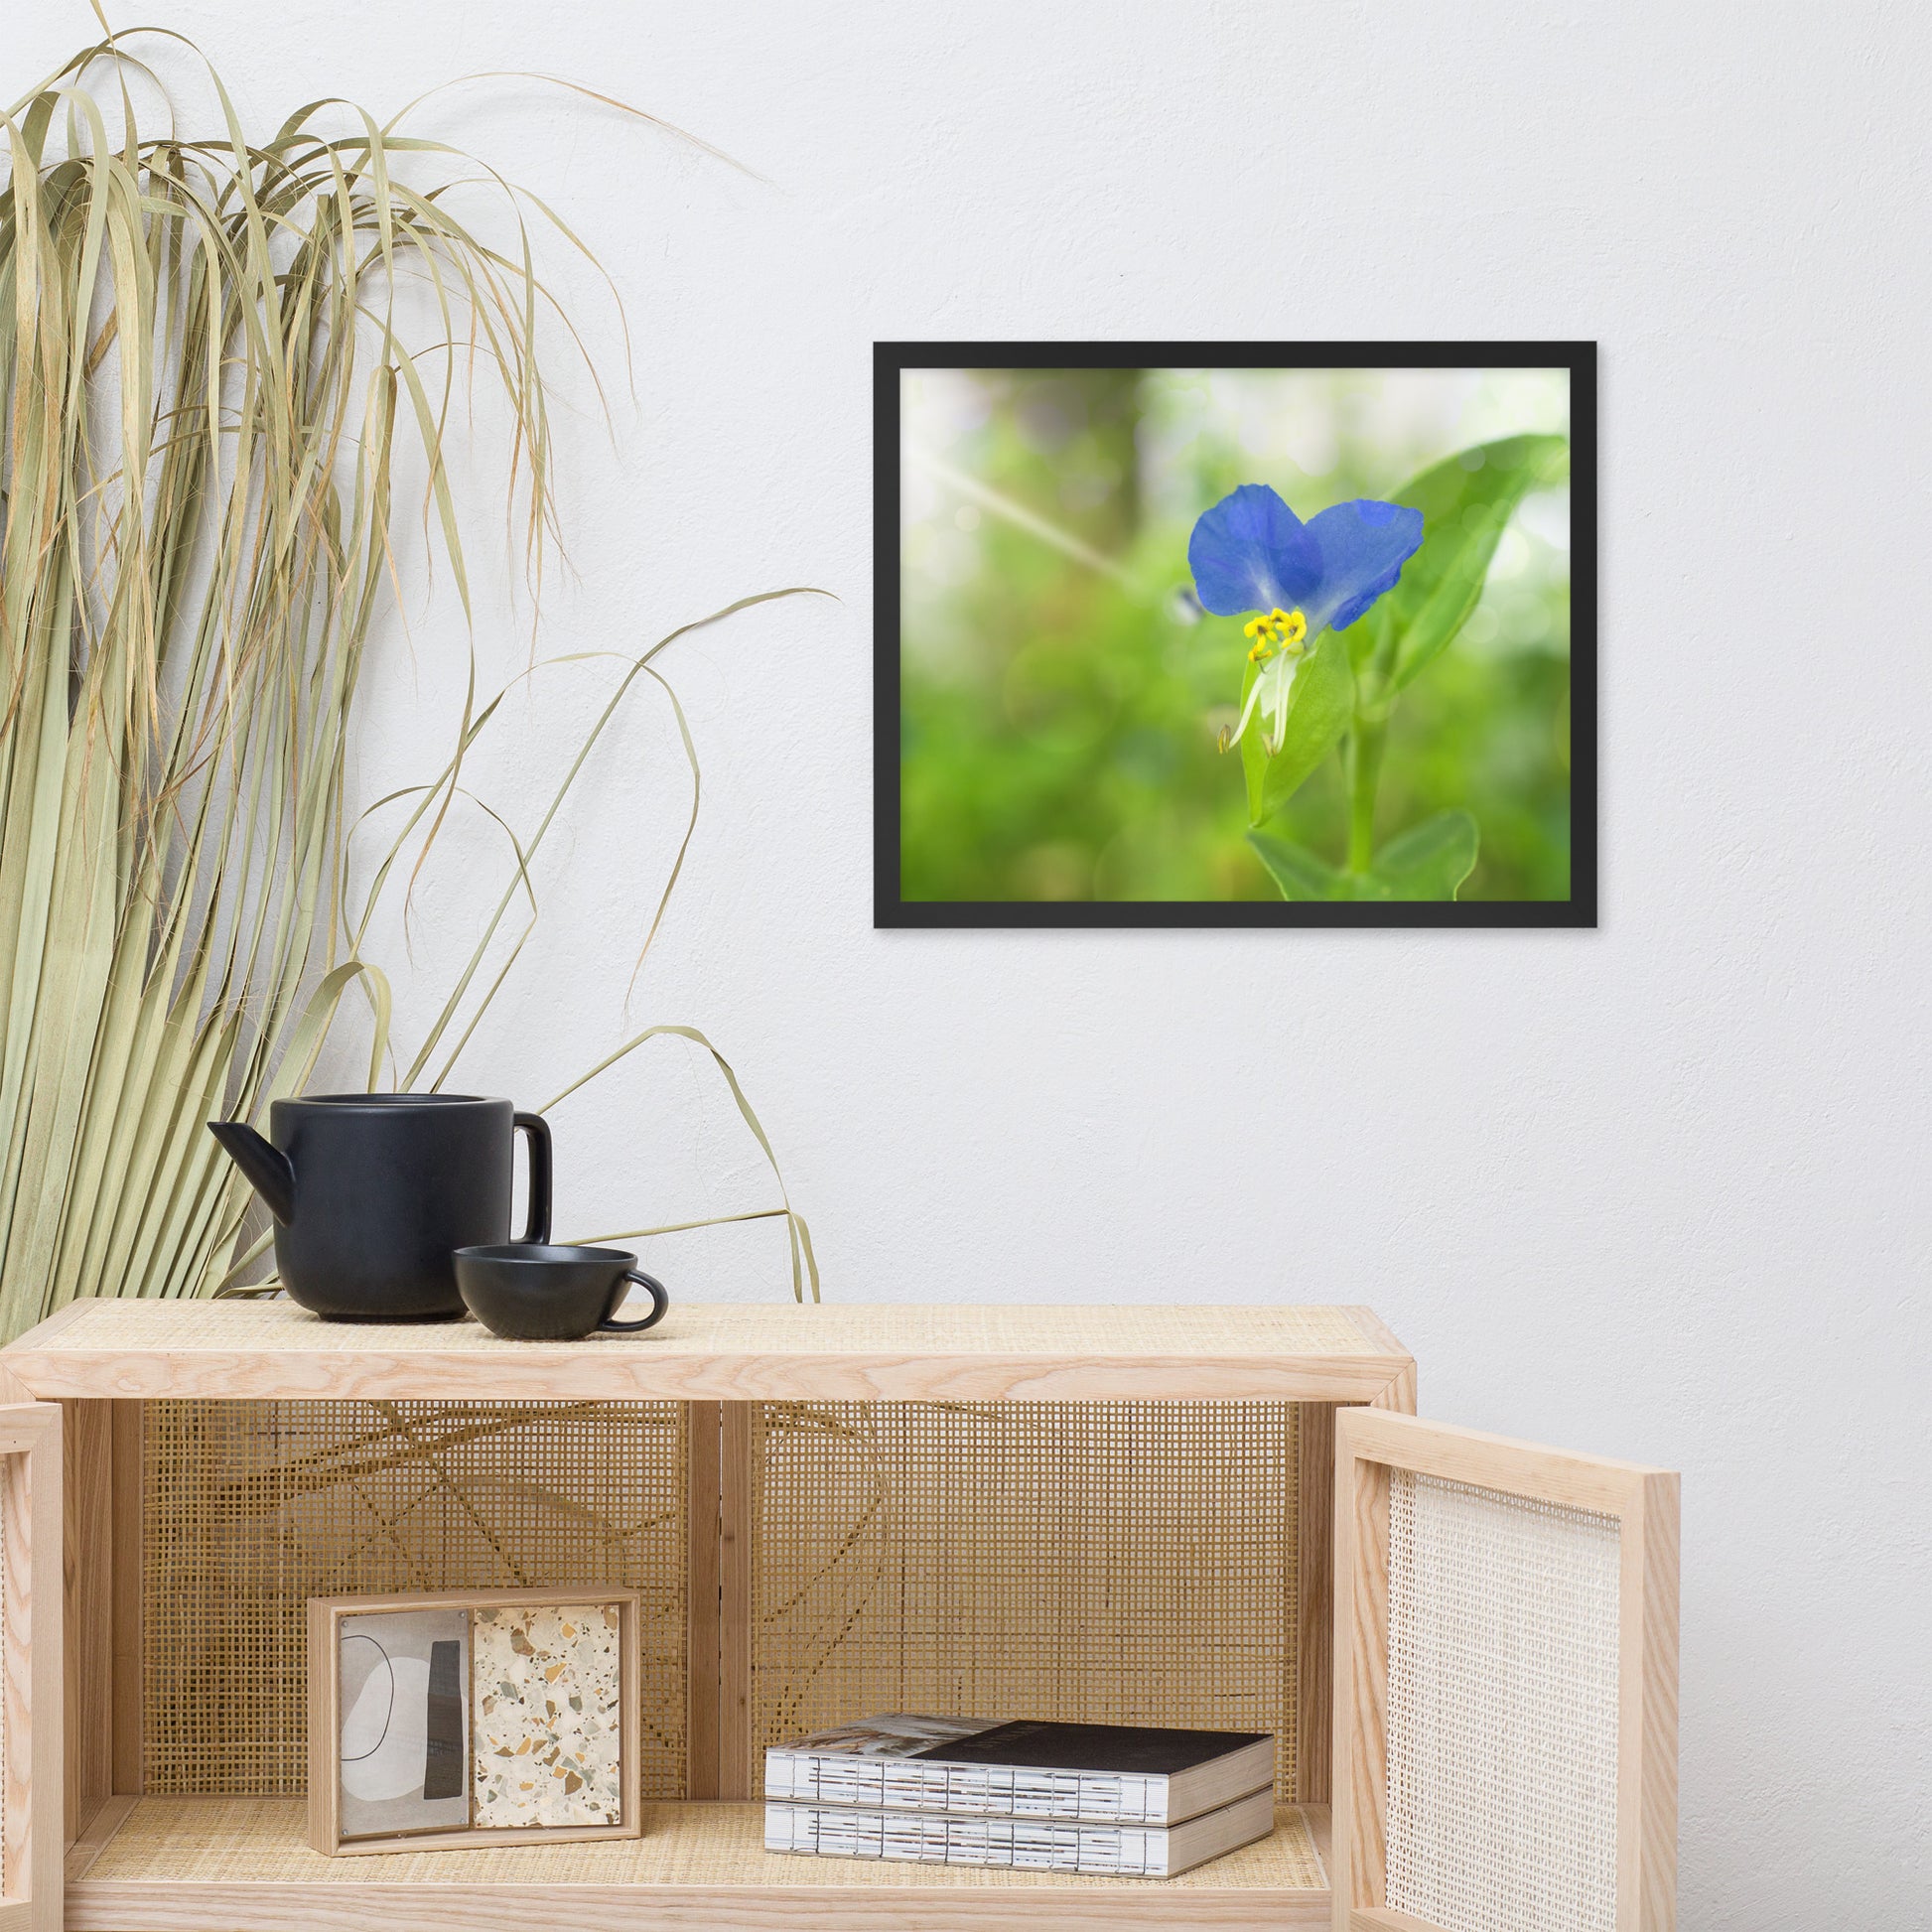 Modern Kitchen Framed Art: Asiatic Dayflower - Floral / Botanical / Nature Photo Framed Wall Art Print - Artwork - Modern Wall Decor